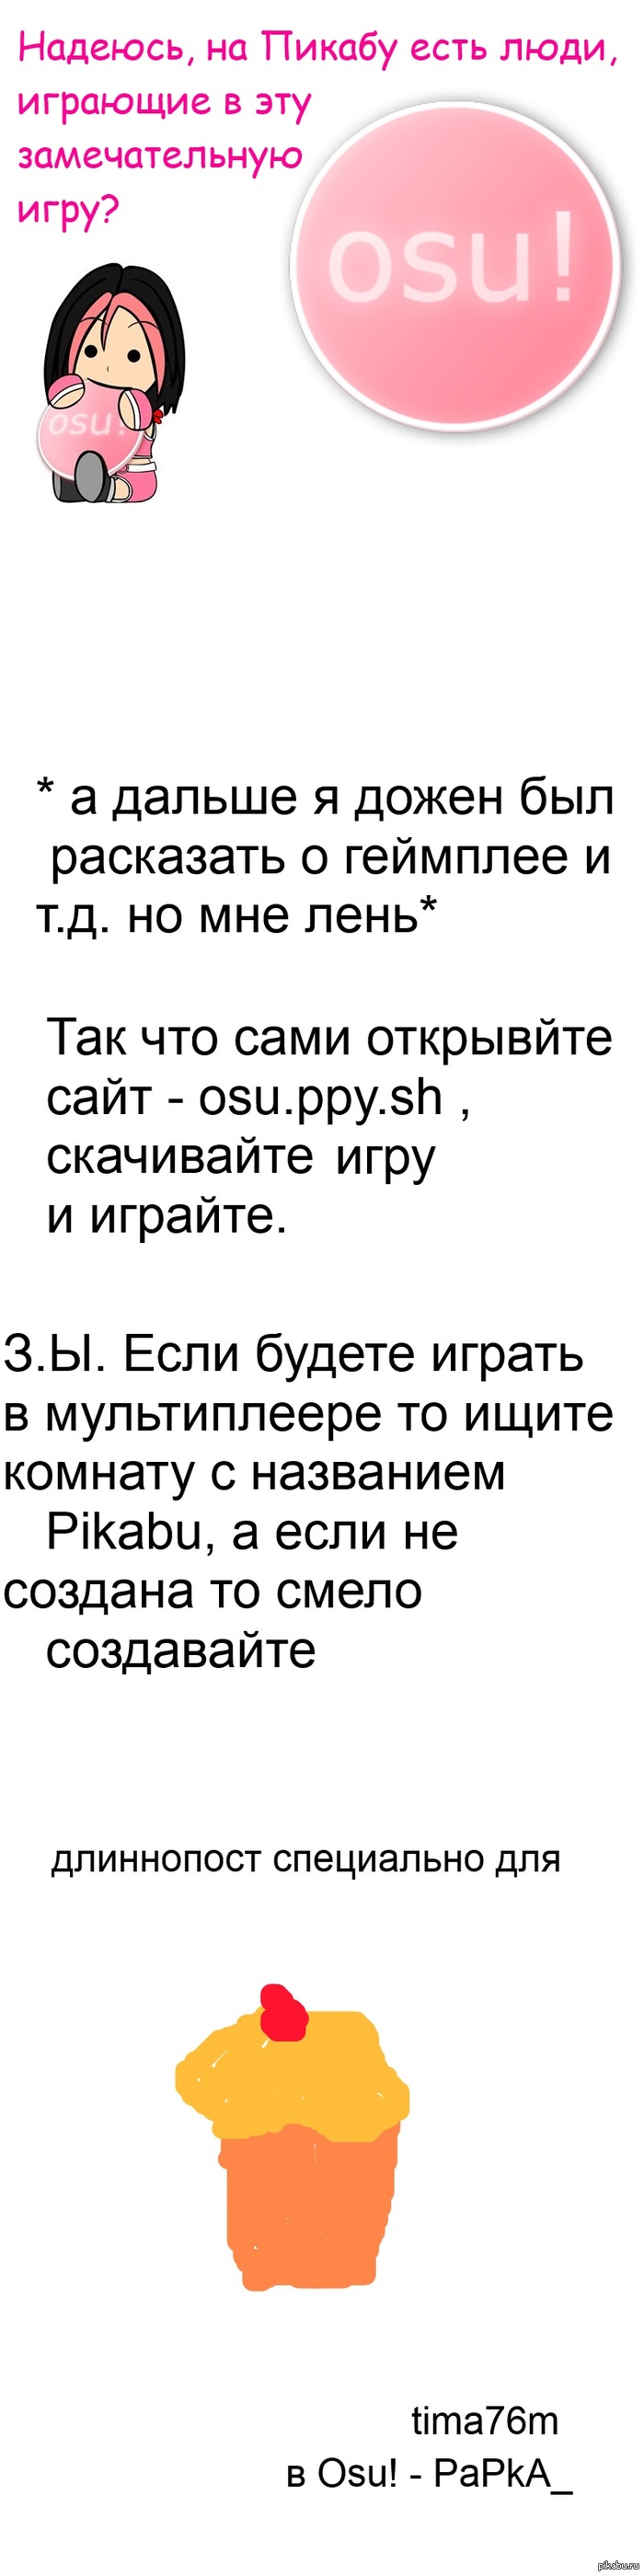 Osu!    http://pikabu.ru/story/_1256811   ,      